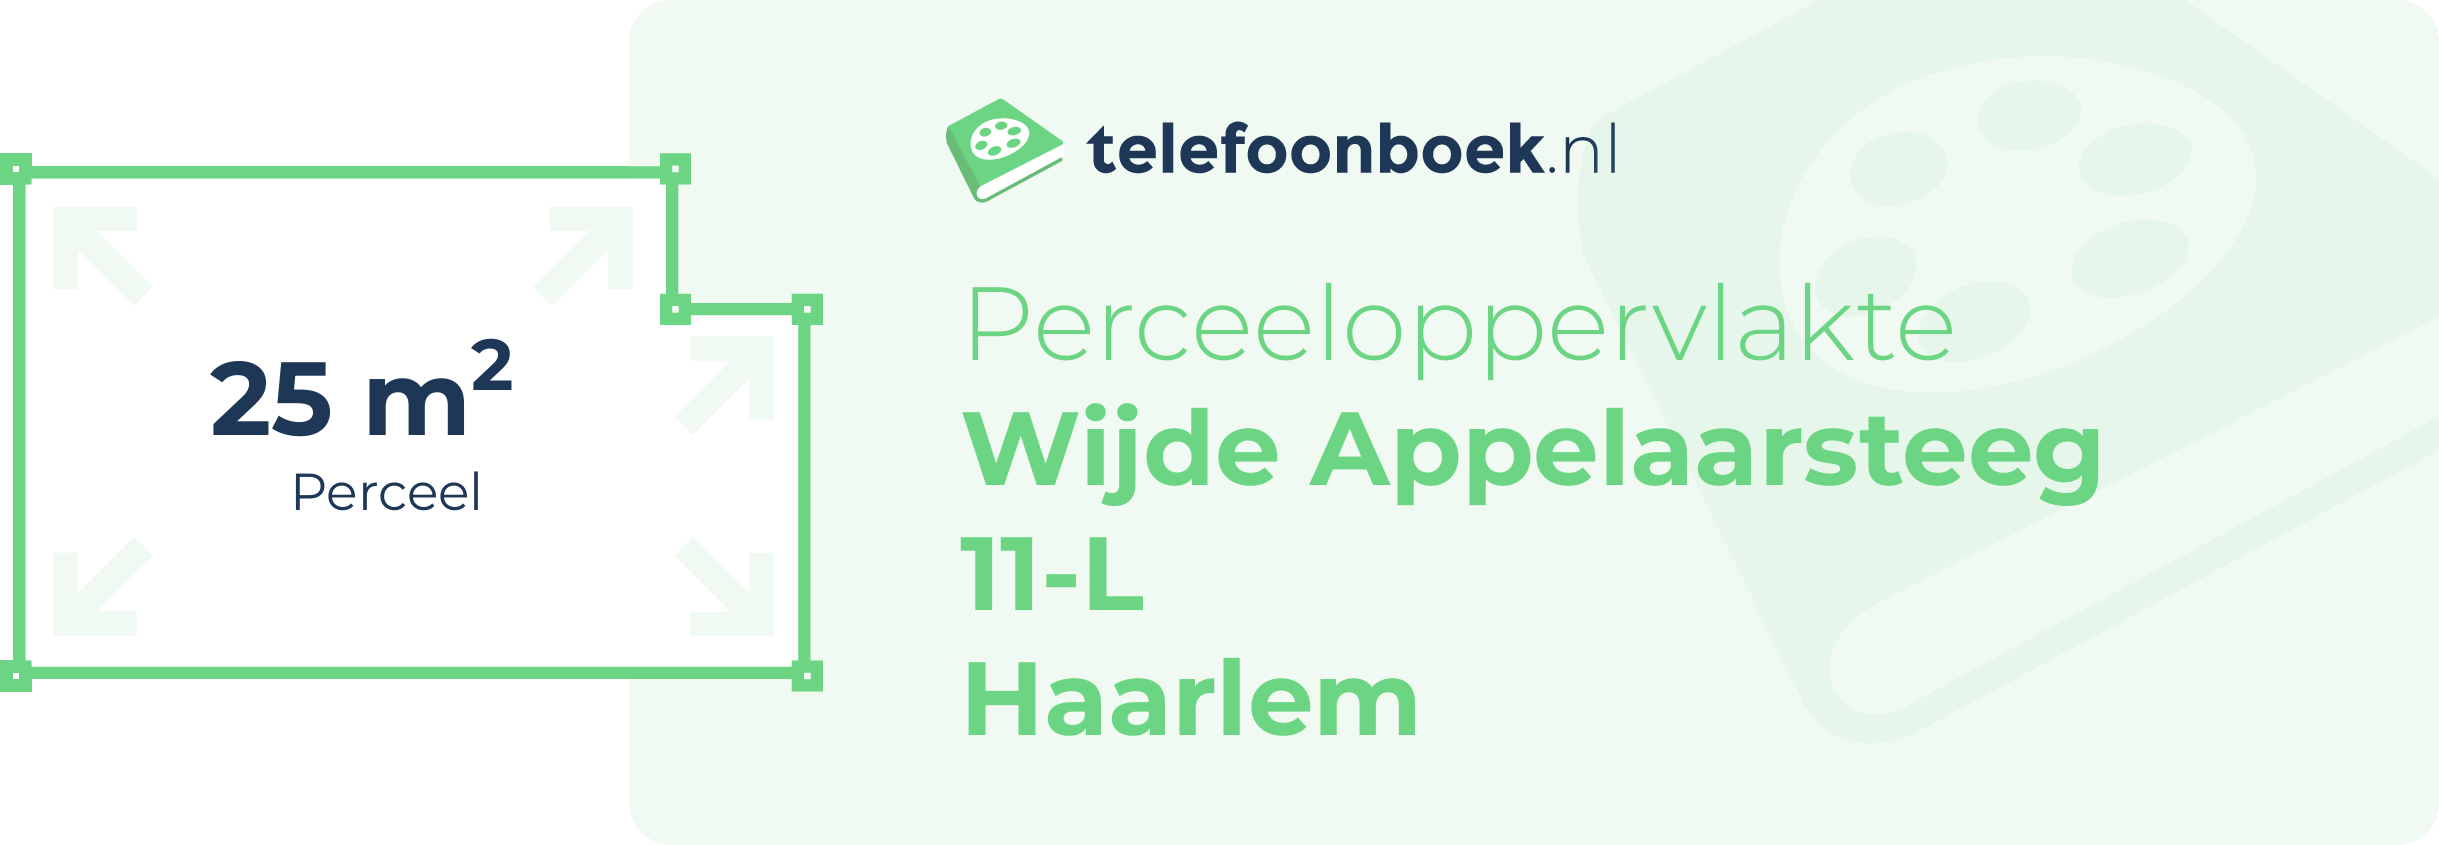 Perceeloppervlakte Wijde Appelaarsteeg 11-L Haarlem